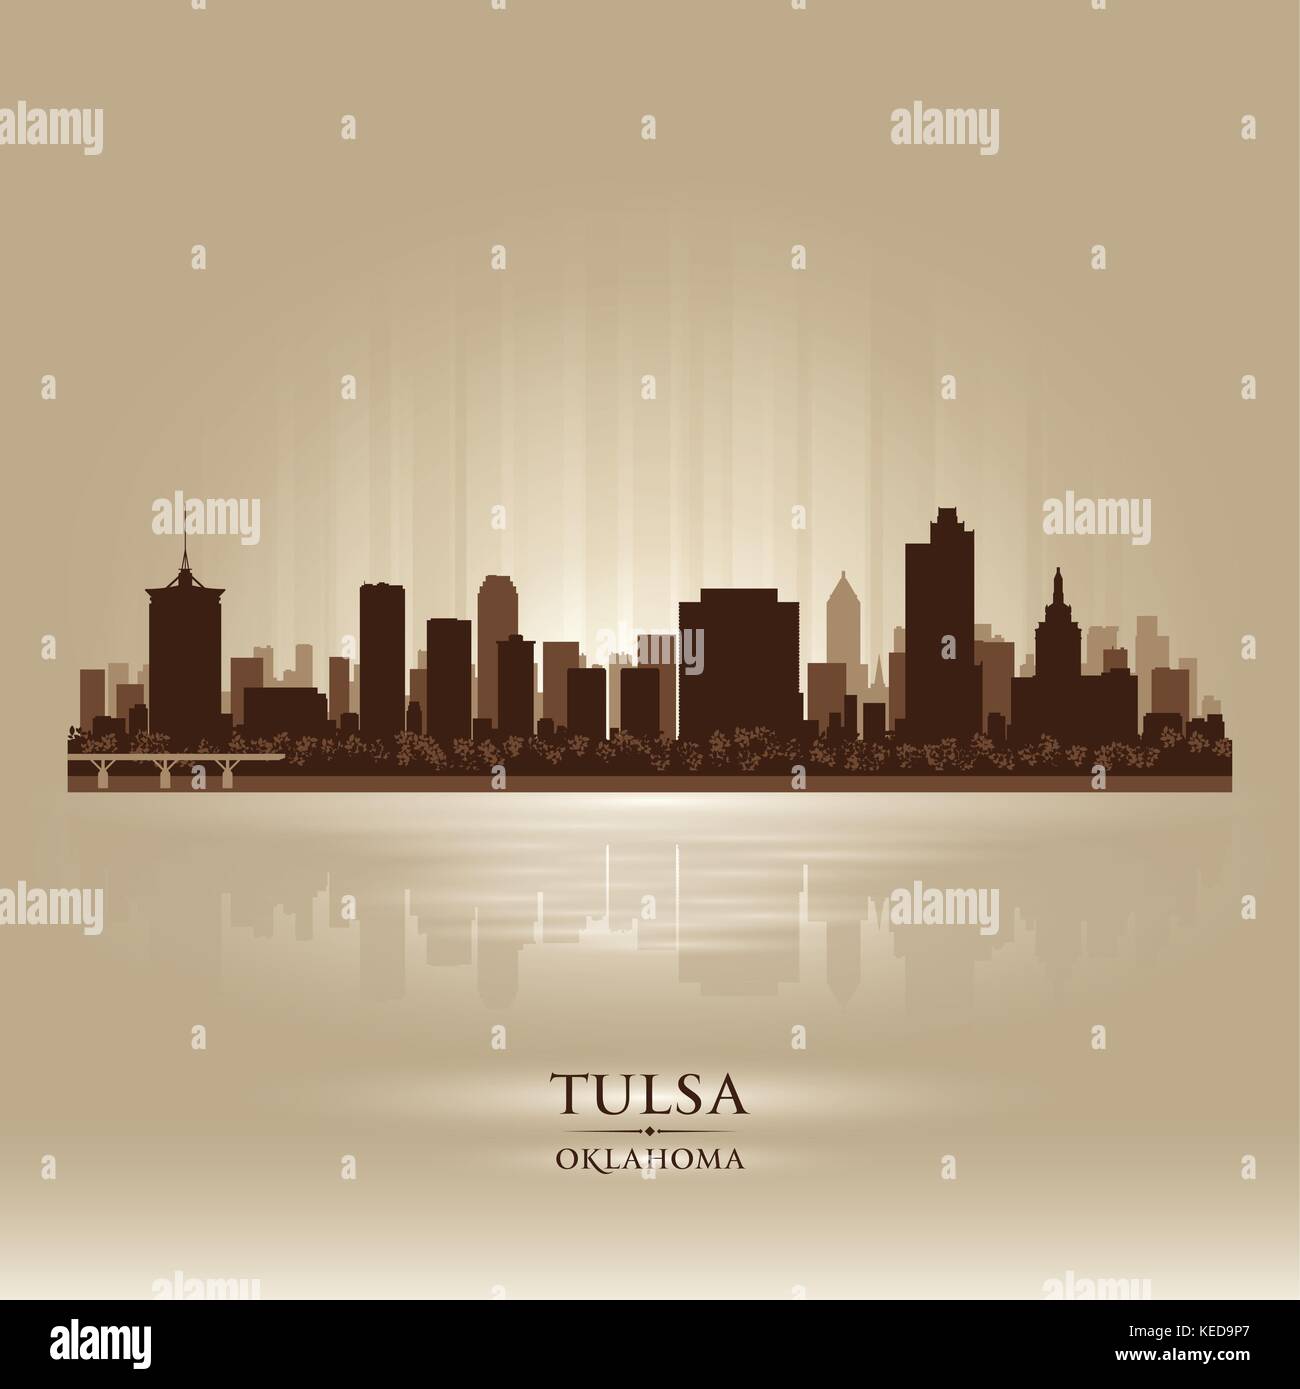 Tulsa Oklahoma city skyline silhouette. Vector illustration Stock Vector